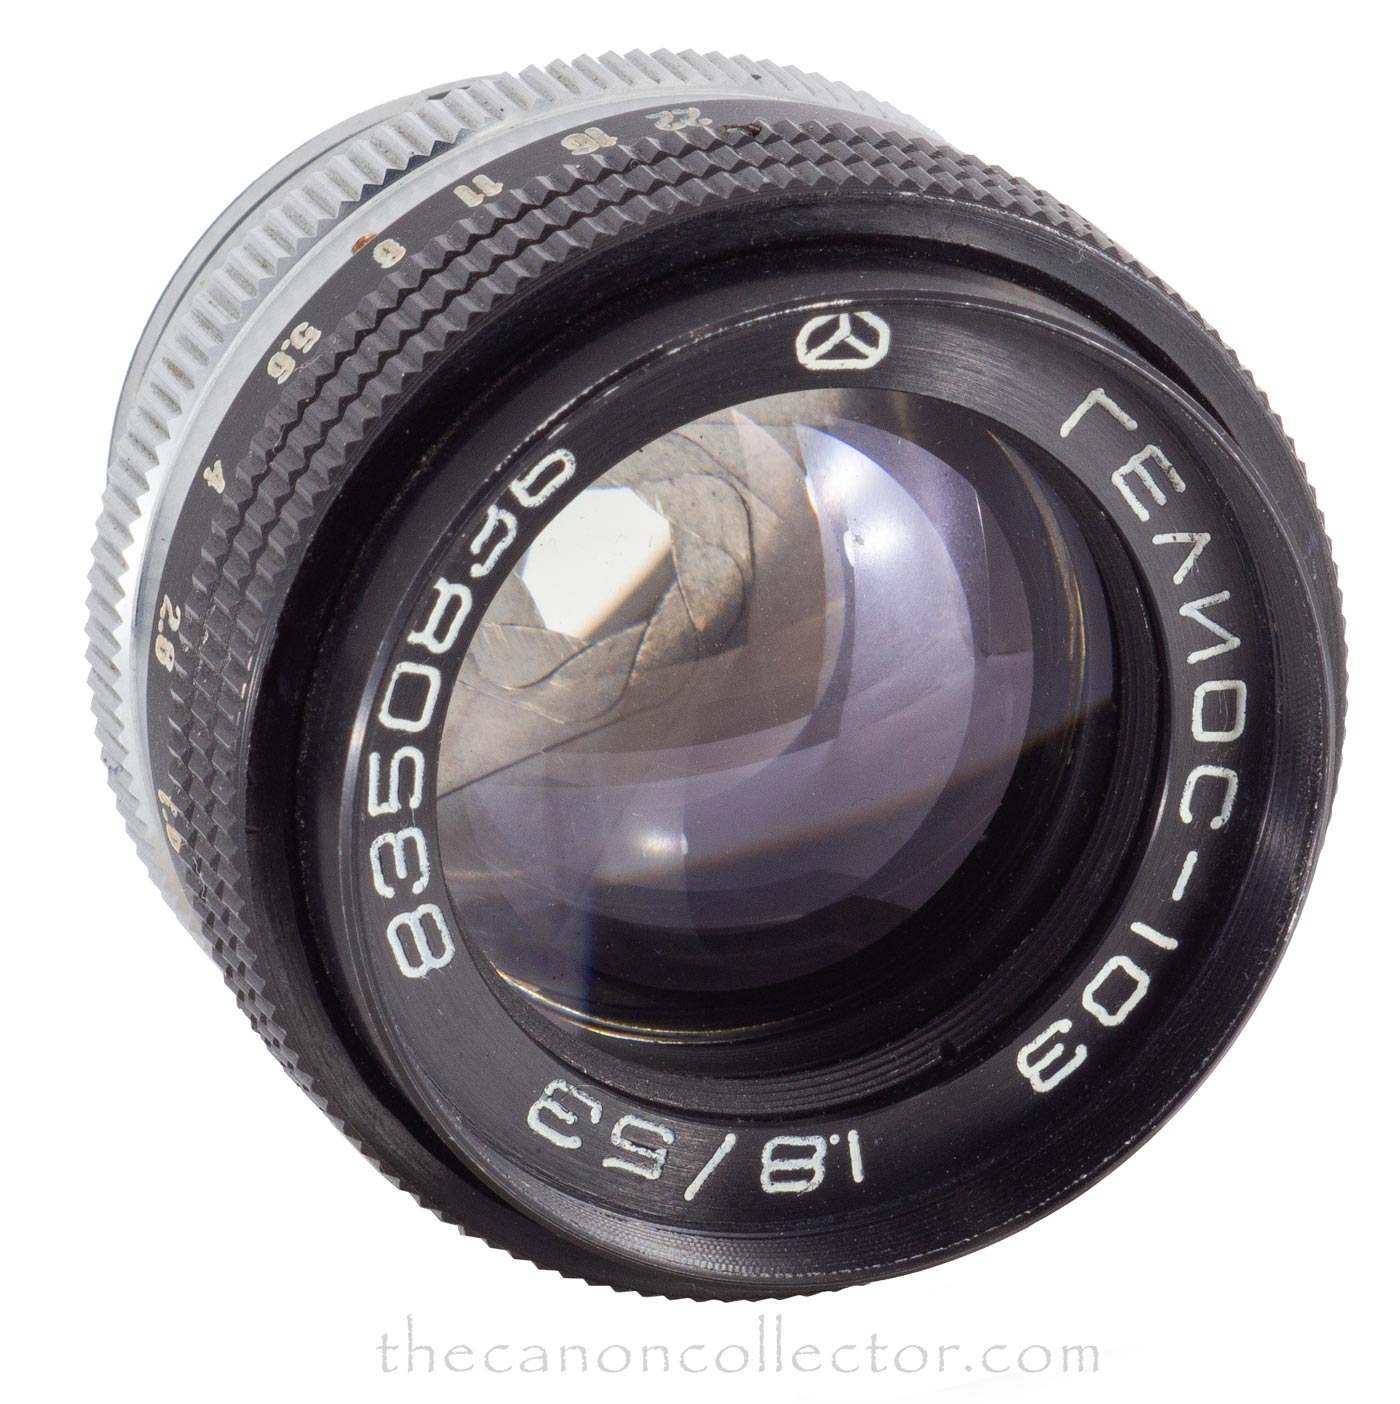 Helios-103 53mm f/1.8 Lens